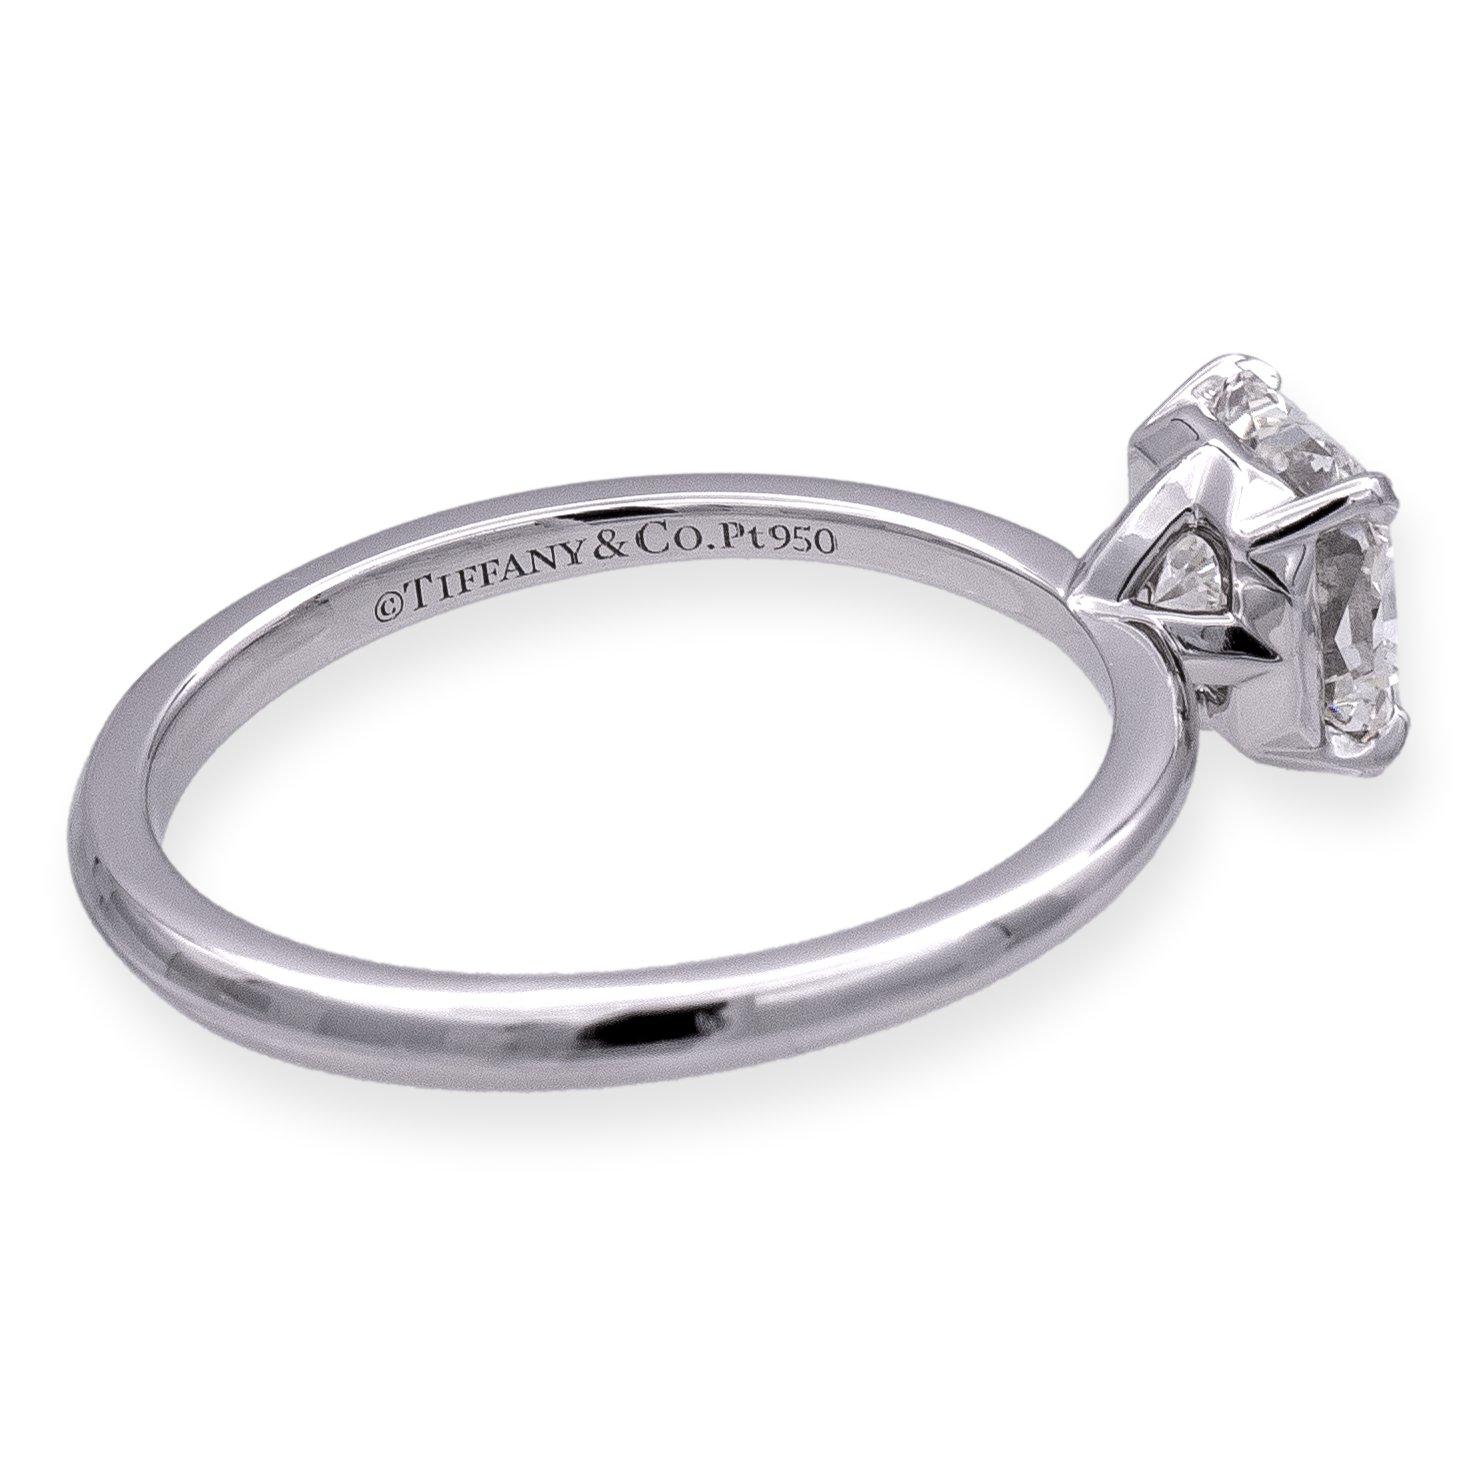 Tiffany & Co. Verlobungsring aus Platin mit True Cut-Diamant 1,04 Karat I VVS1 (Carréeschliff)